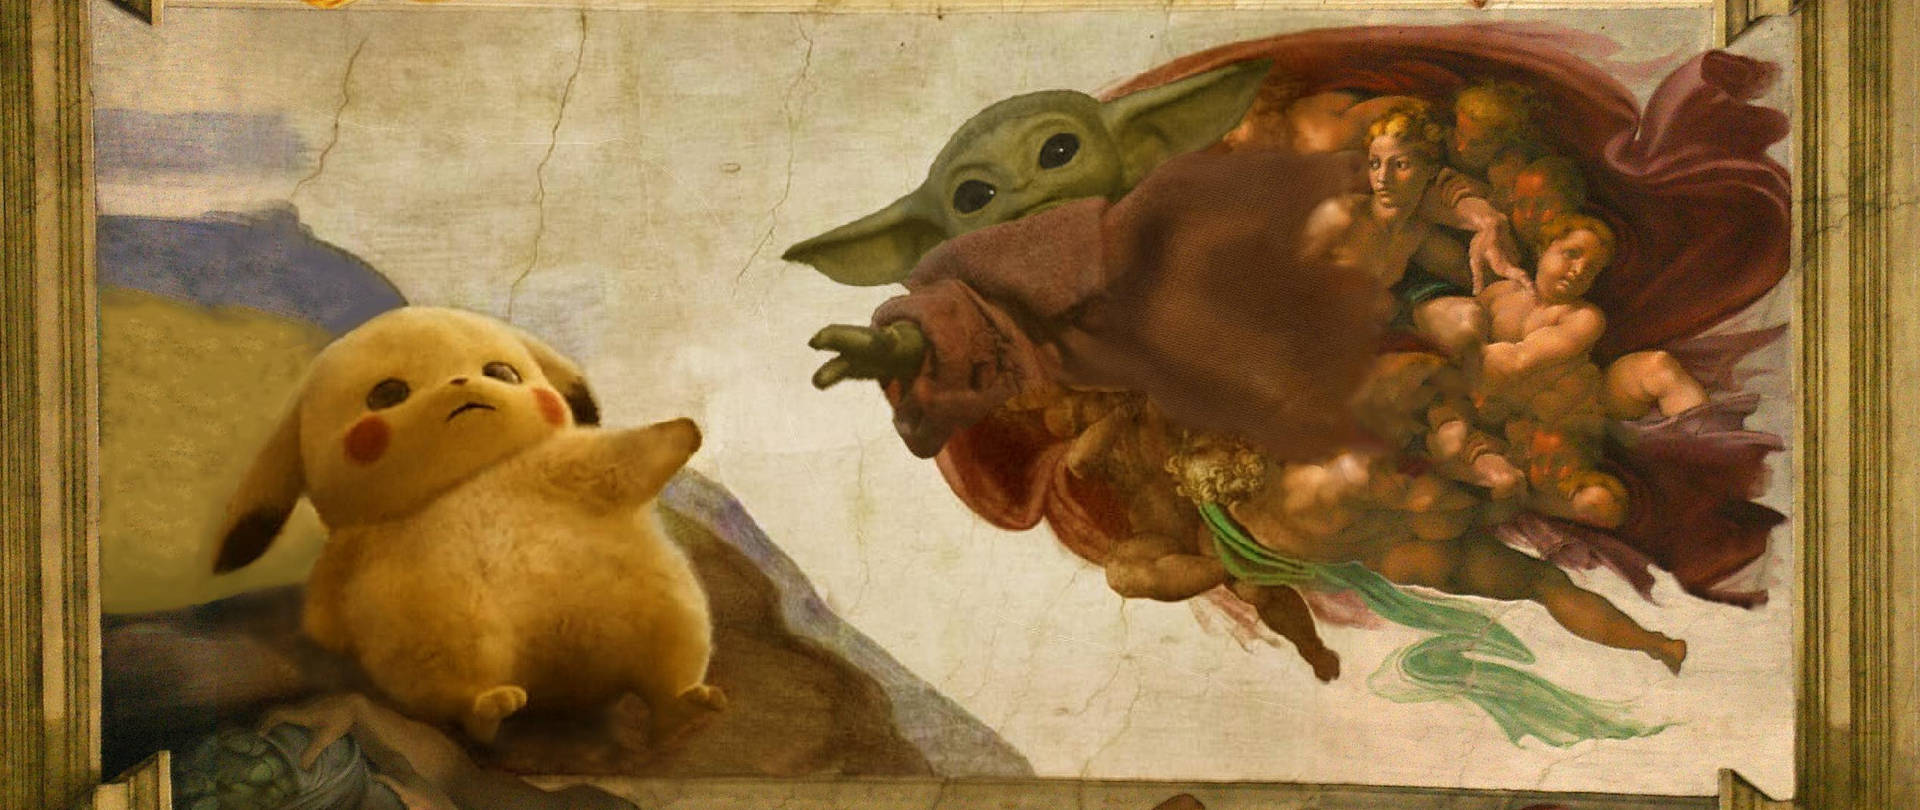 Cute Baby Yoda And Pikachu